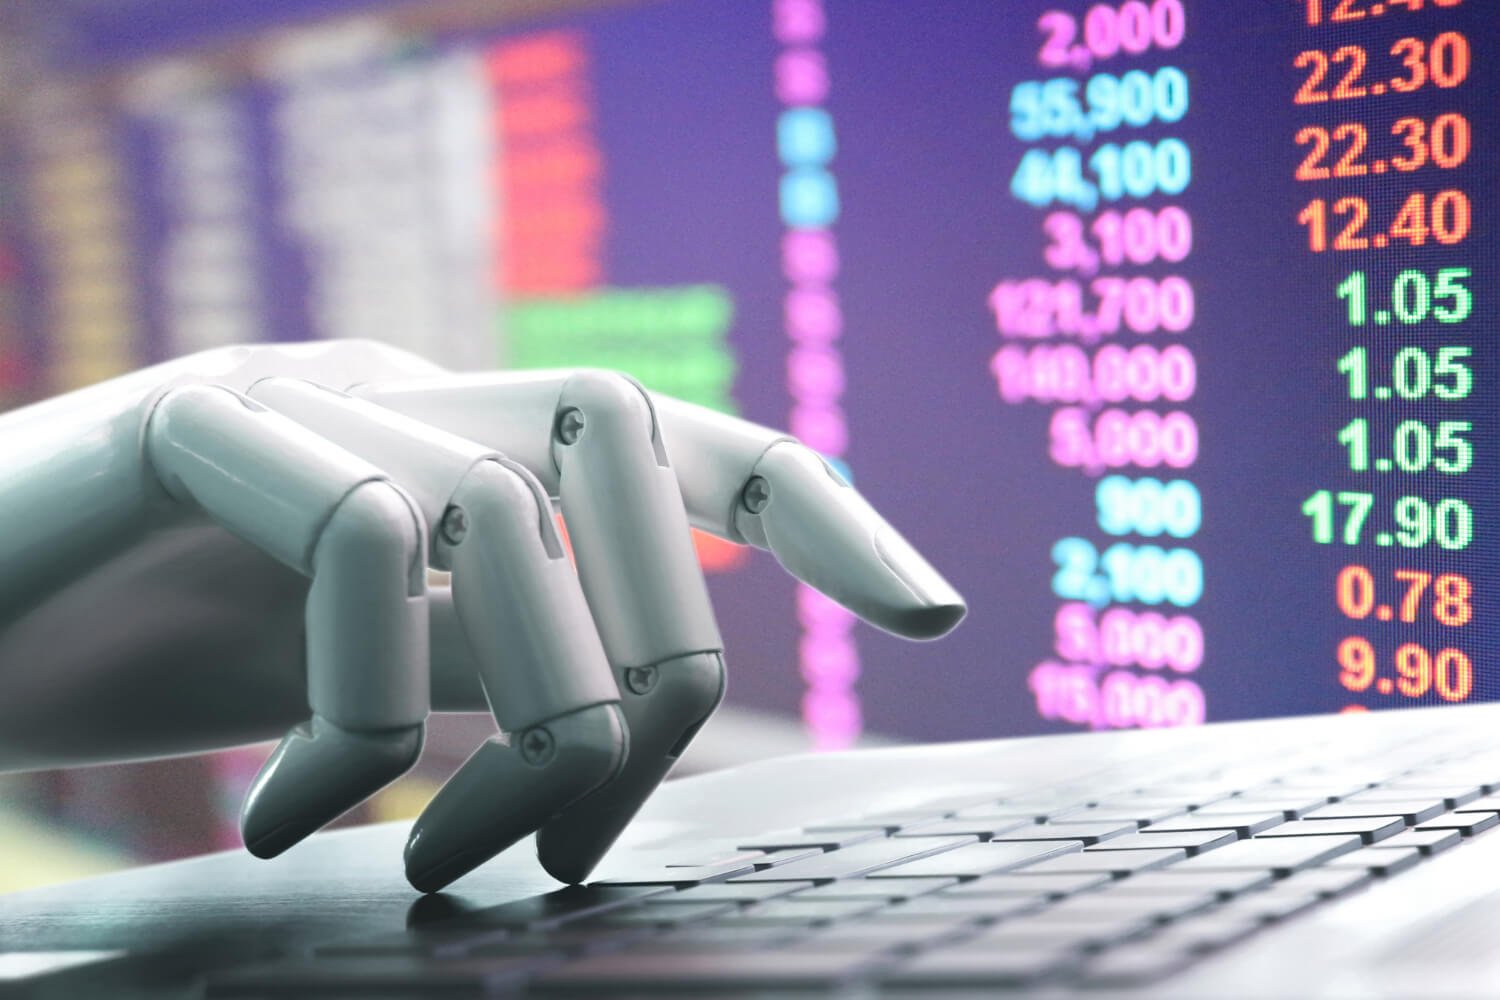 algo trading chatbot robot hand pressing computer keyboard to enter a stock trade